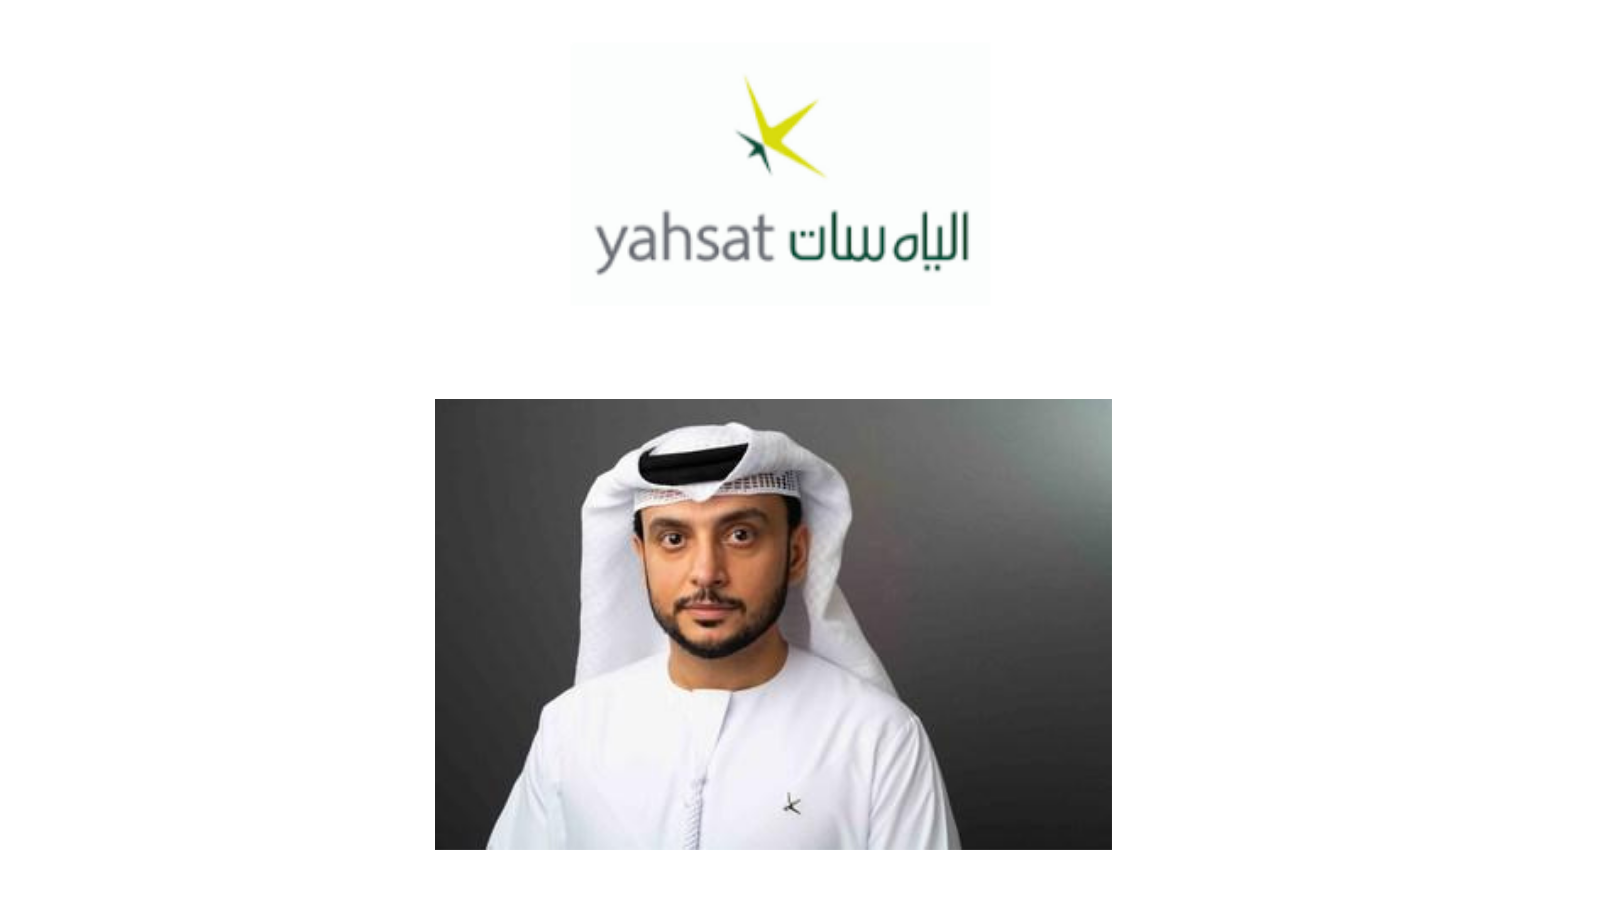 Yahsat Logo and Sulaiman Al Ali CCO